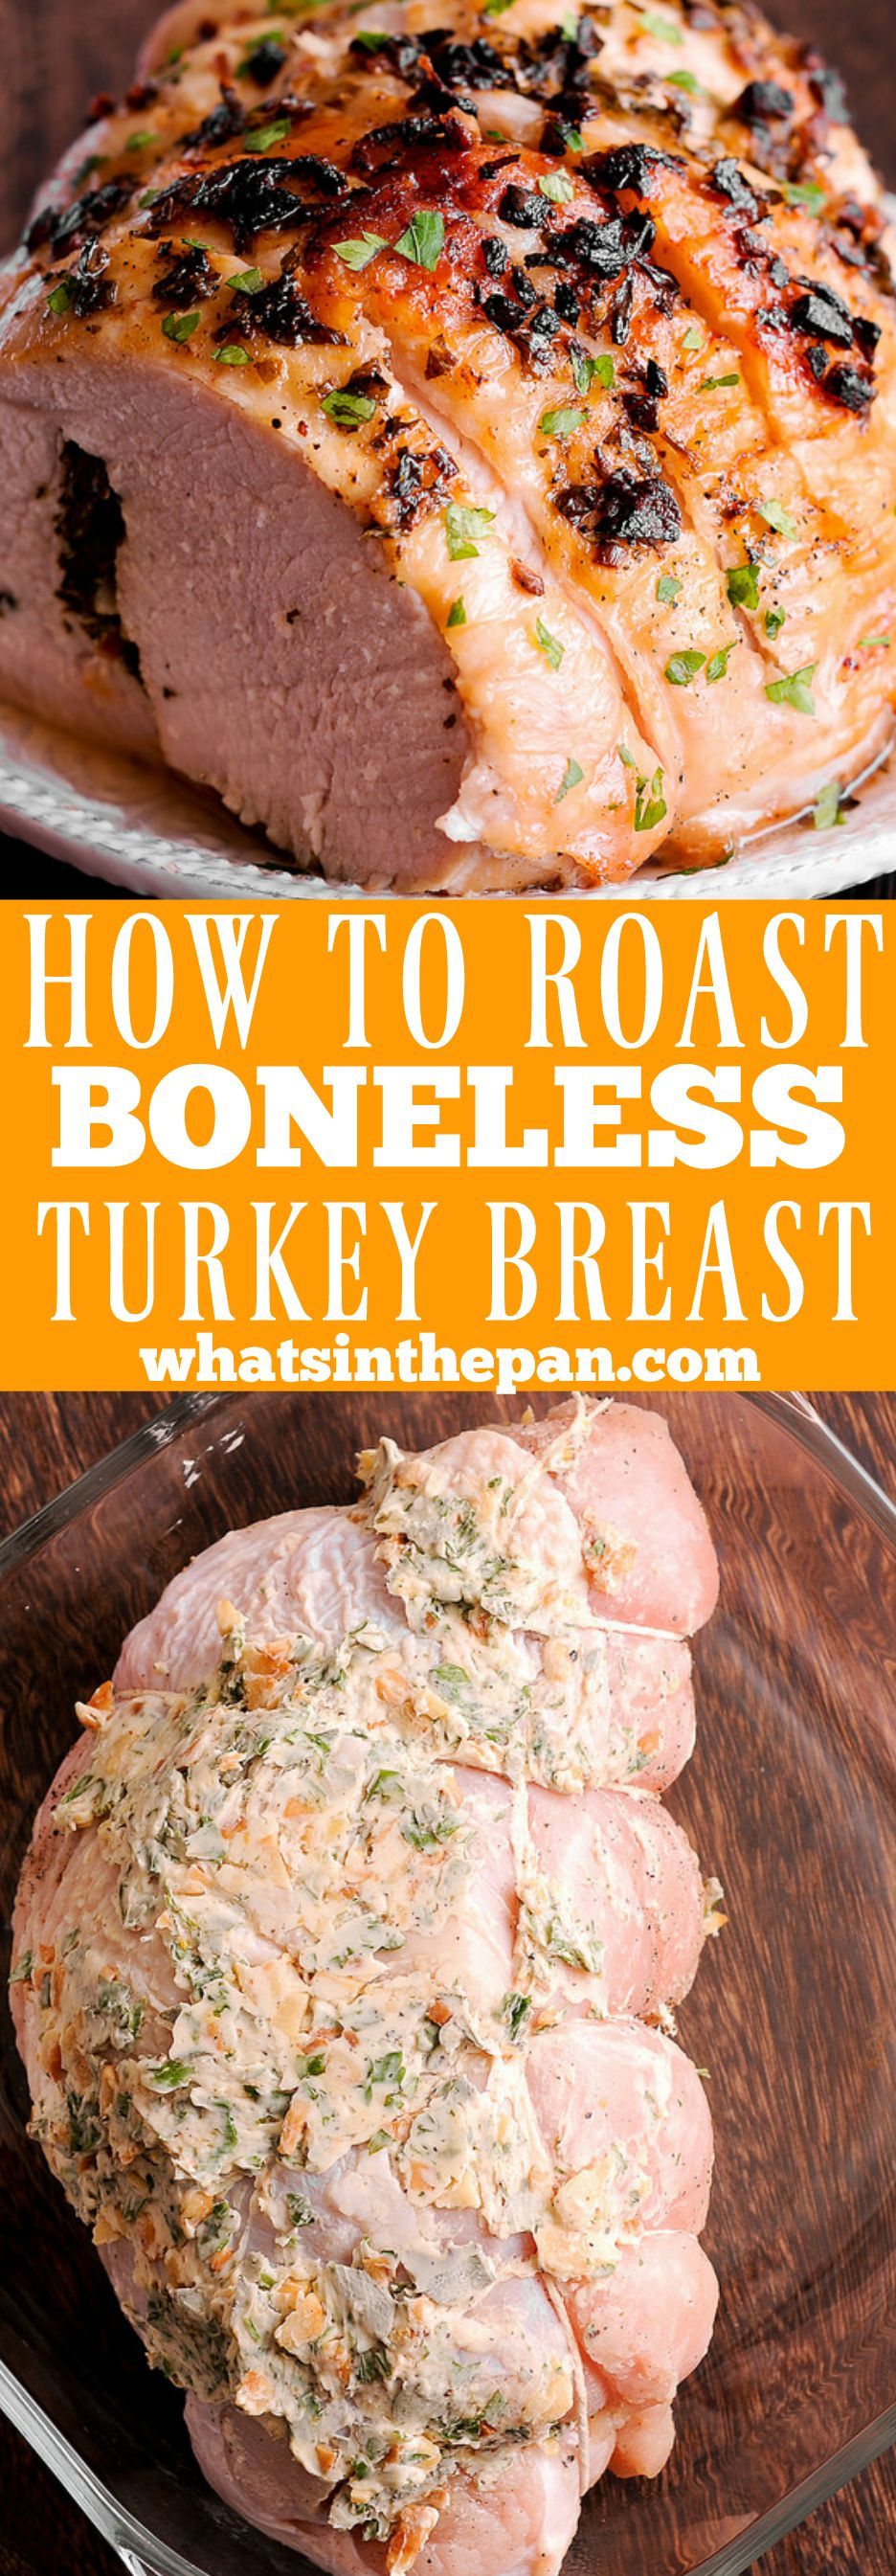 19 turkey breast recipes boneless ideas